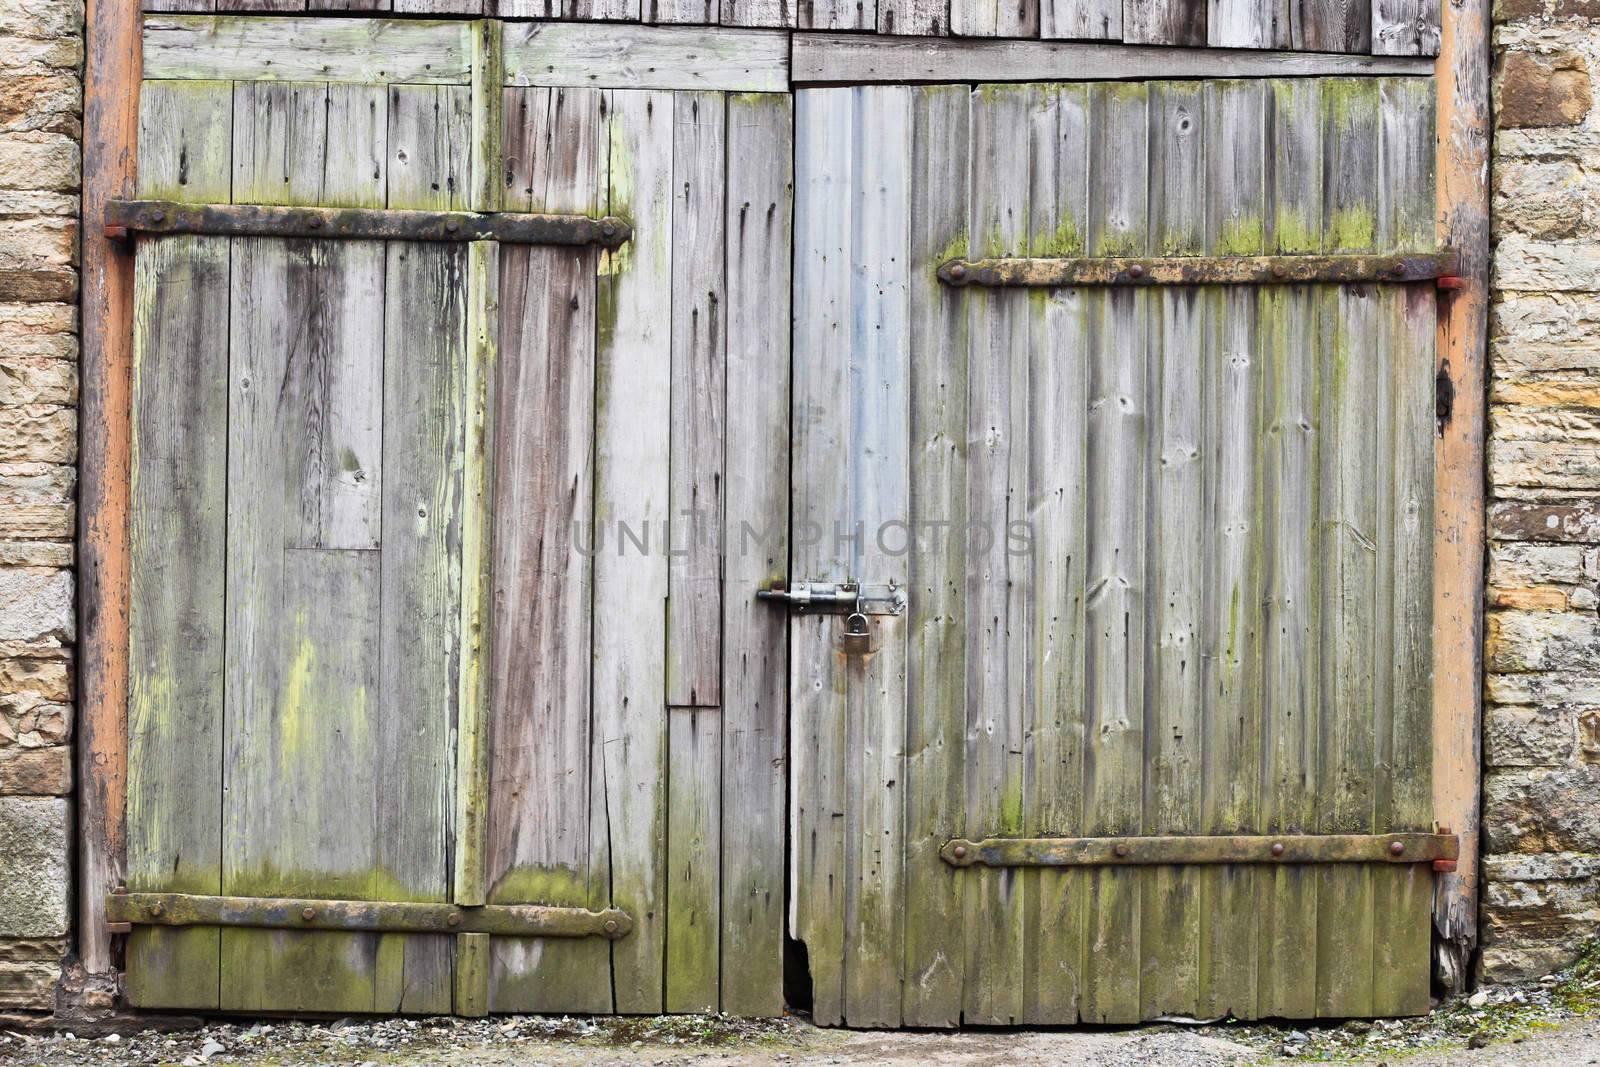 Rustic barn door as a background image